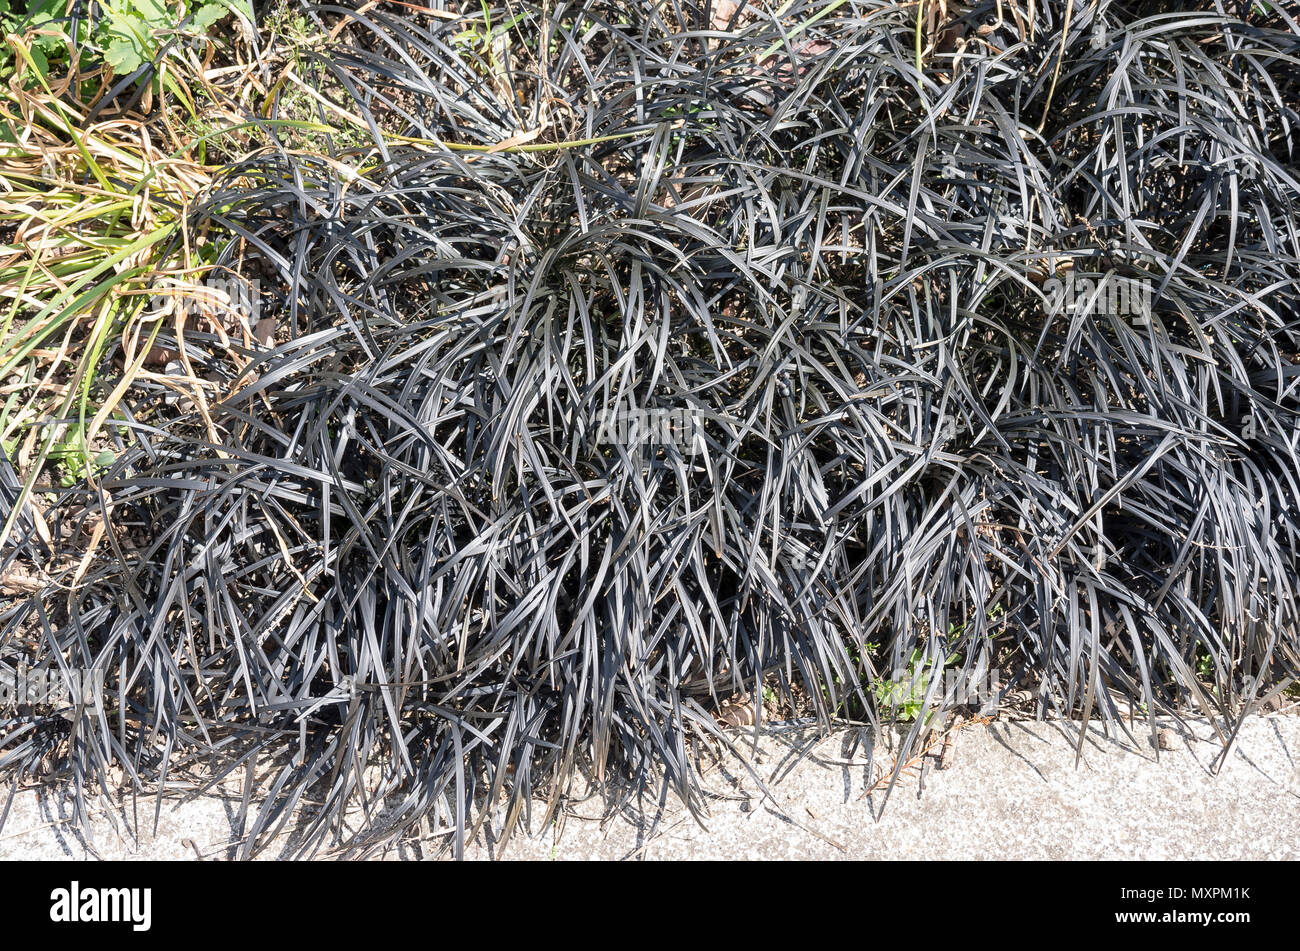 Unusual grassy perennial plant resembling black grass - Ophiopogon Planiscapus Nigrescens in an English garden Stock Photo